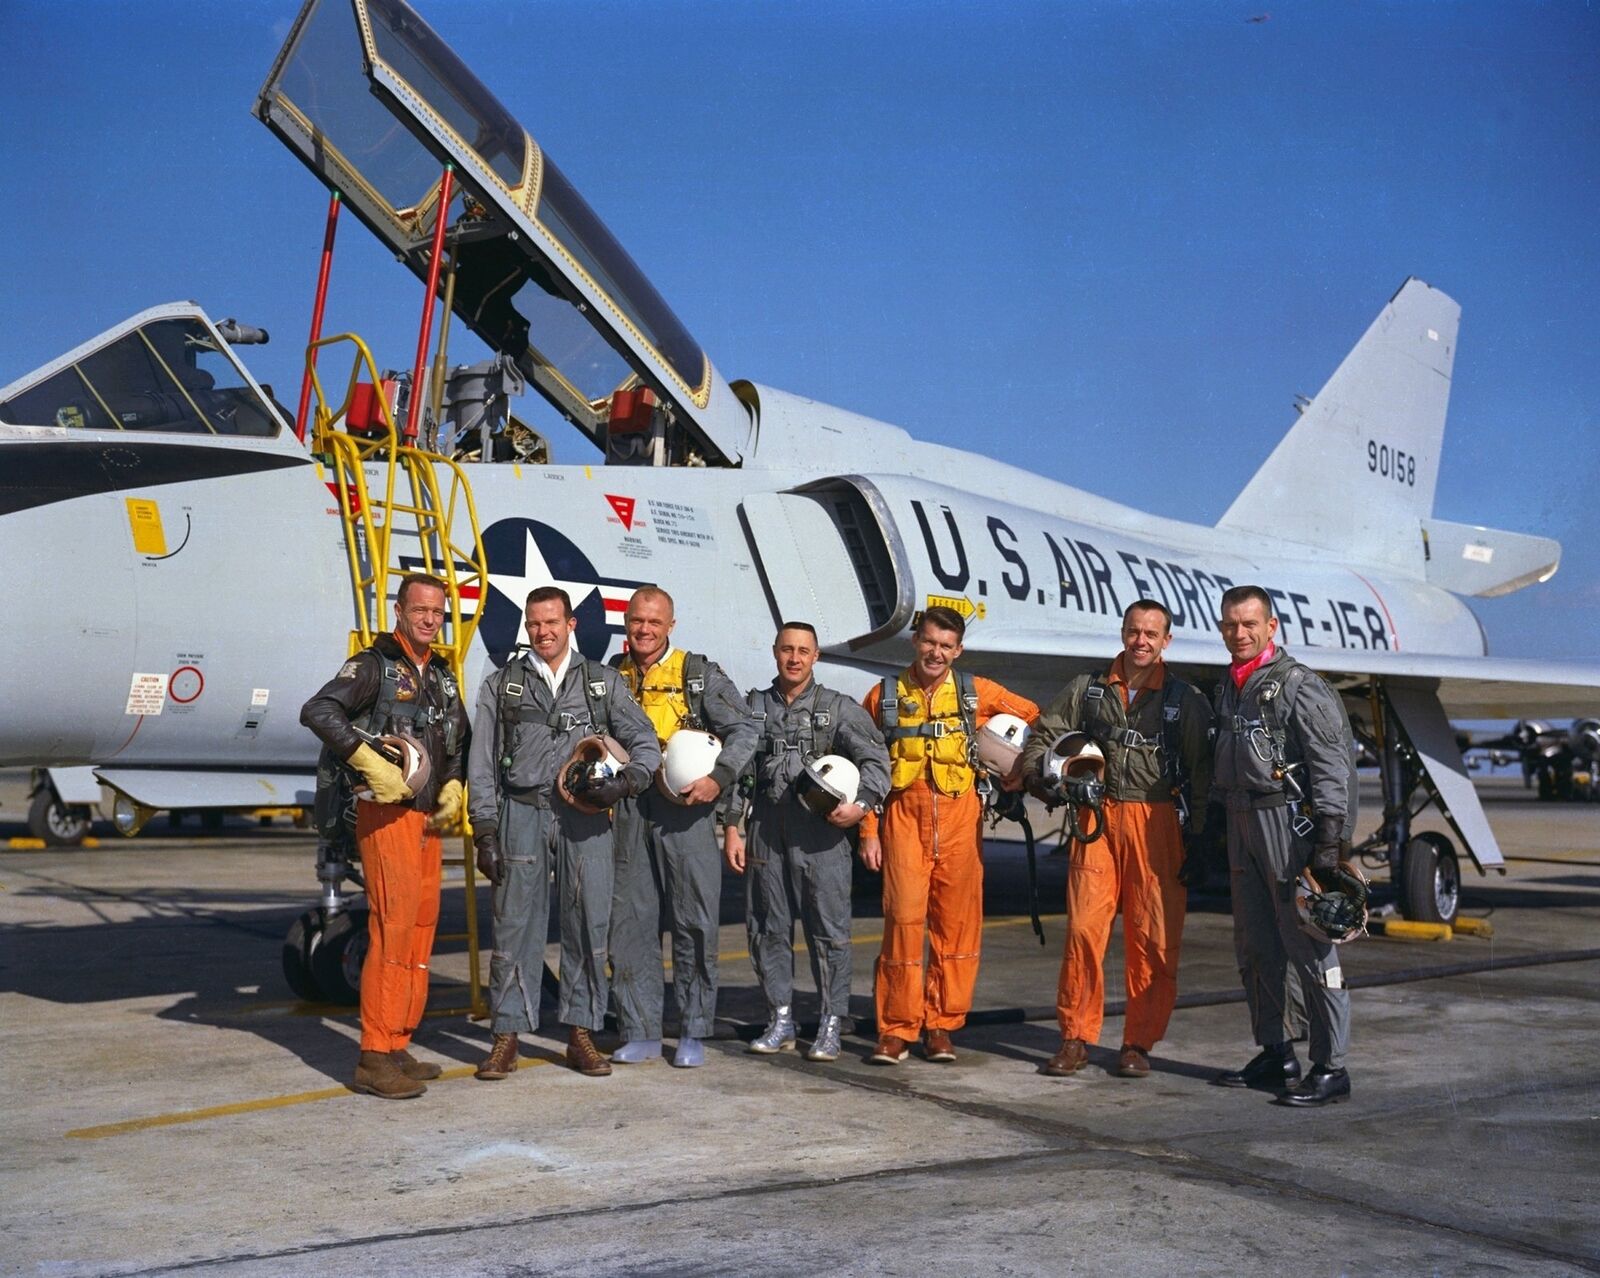 1961 MERCURY SEVEN Astronauts with Aircraft NASA PHOTO  (176-m)